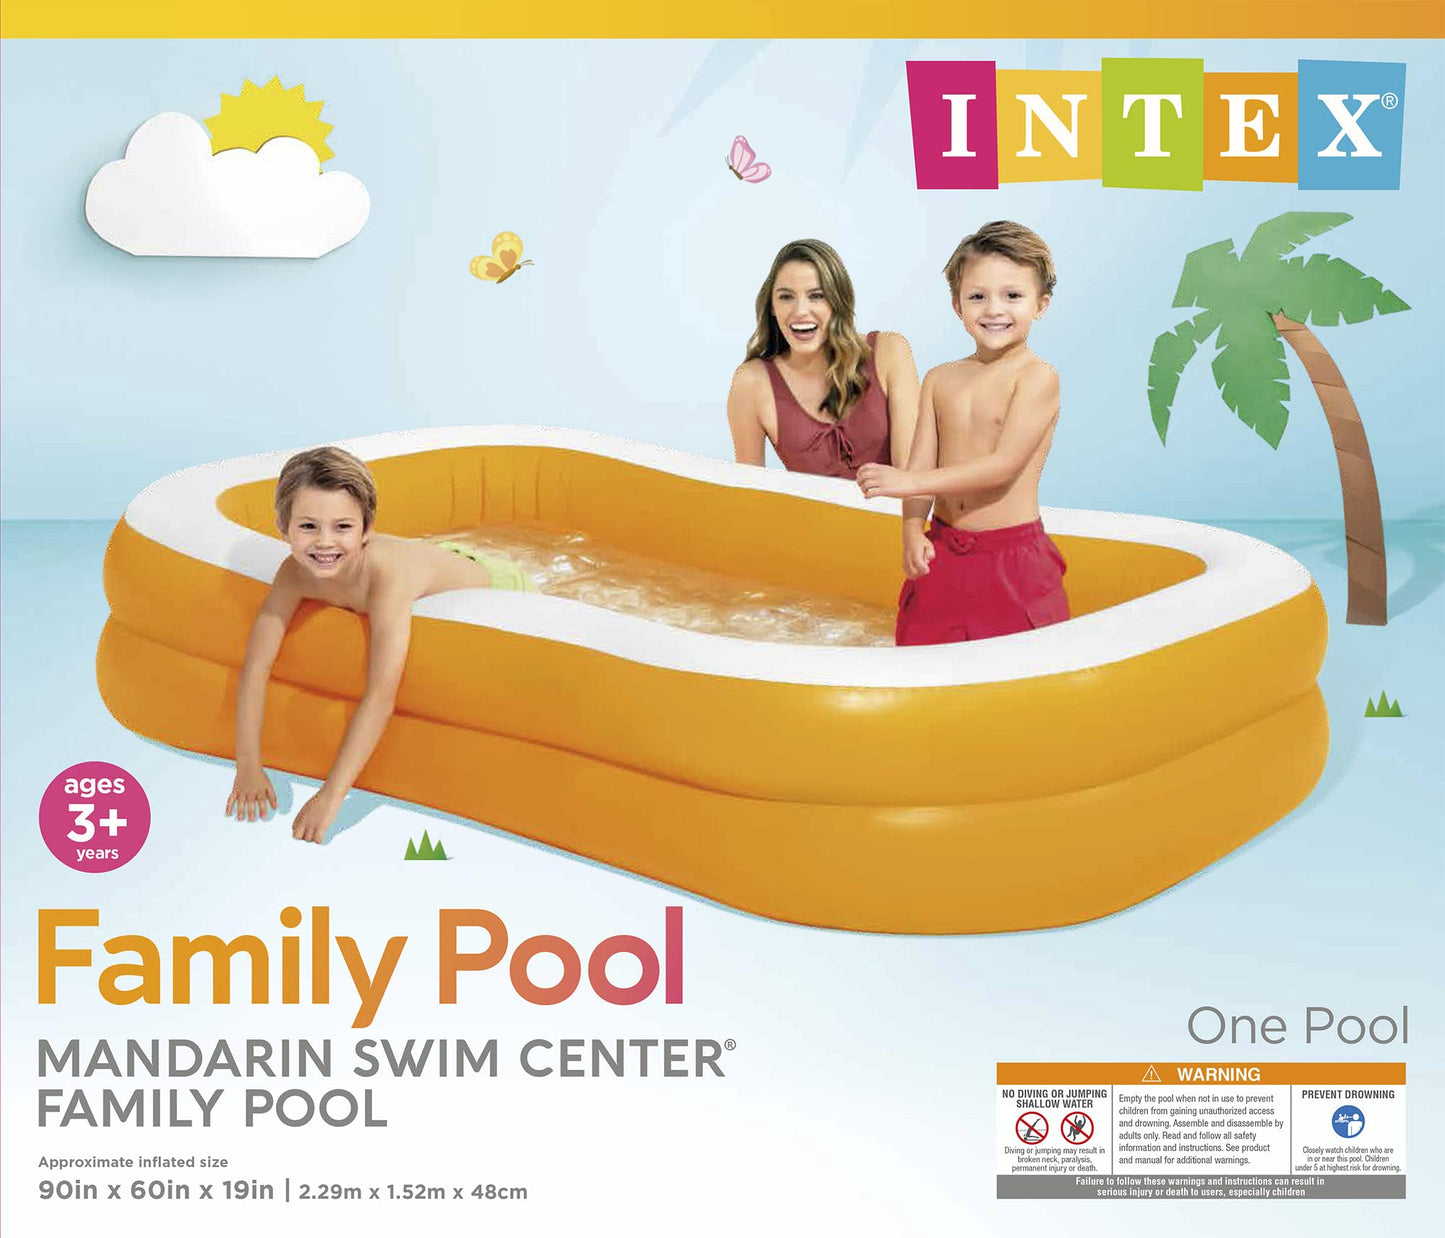 Intex Mandarin Swim Center Family Pool, 90" x 60" x 19", Ages 3+